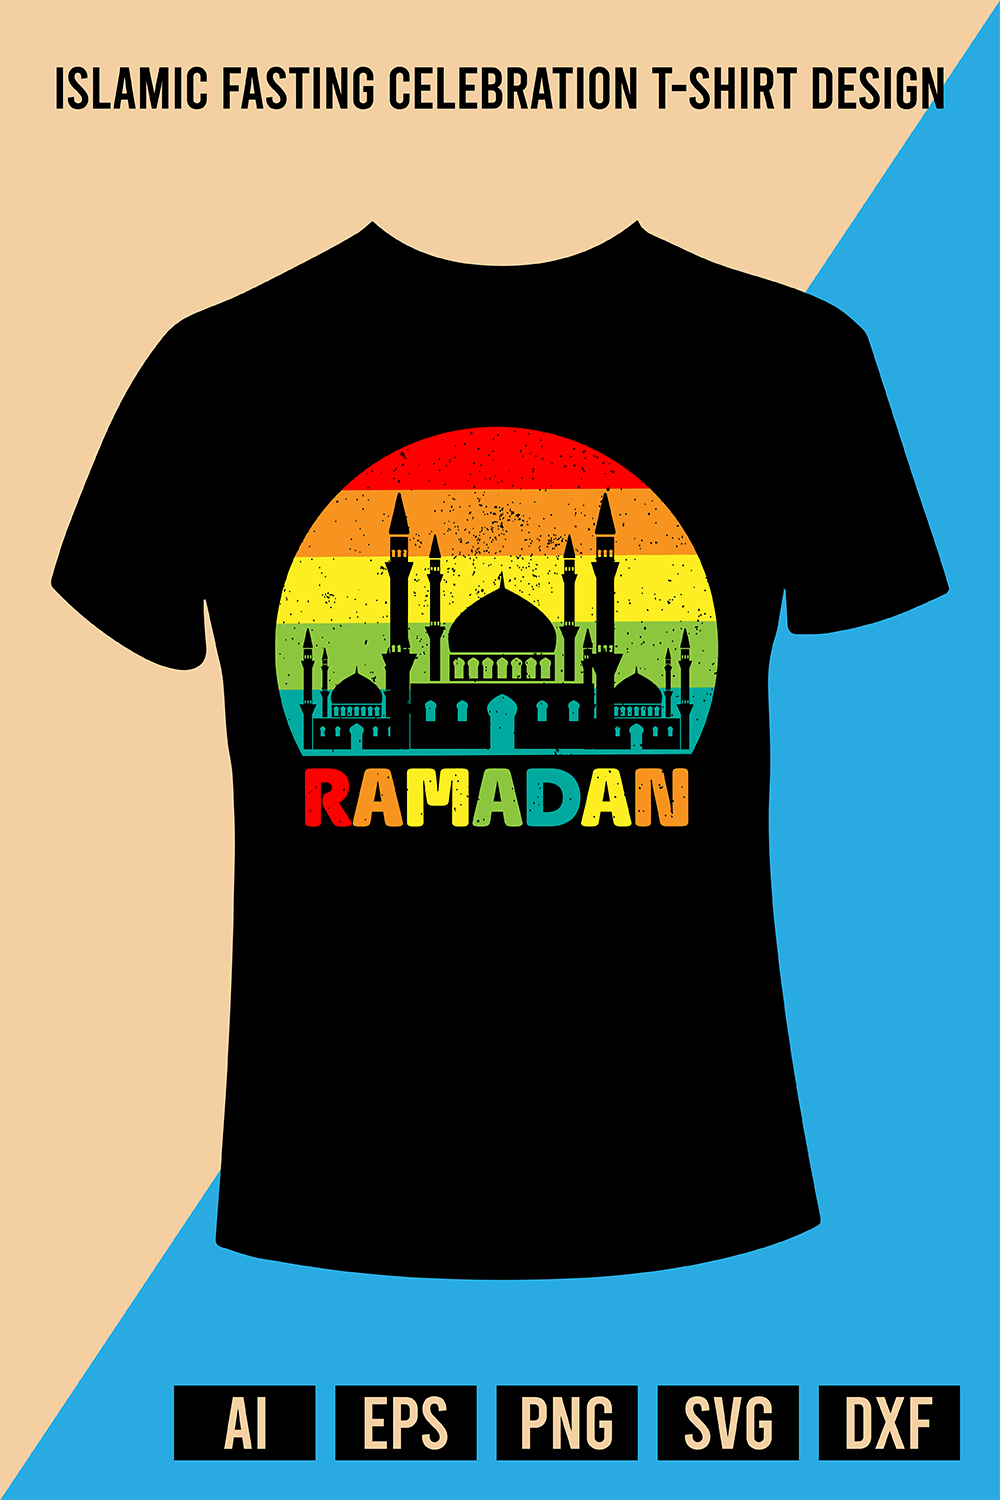 Islamic Fasting Celebration T-Shirt Design pinterest preview image.